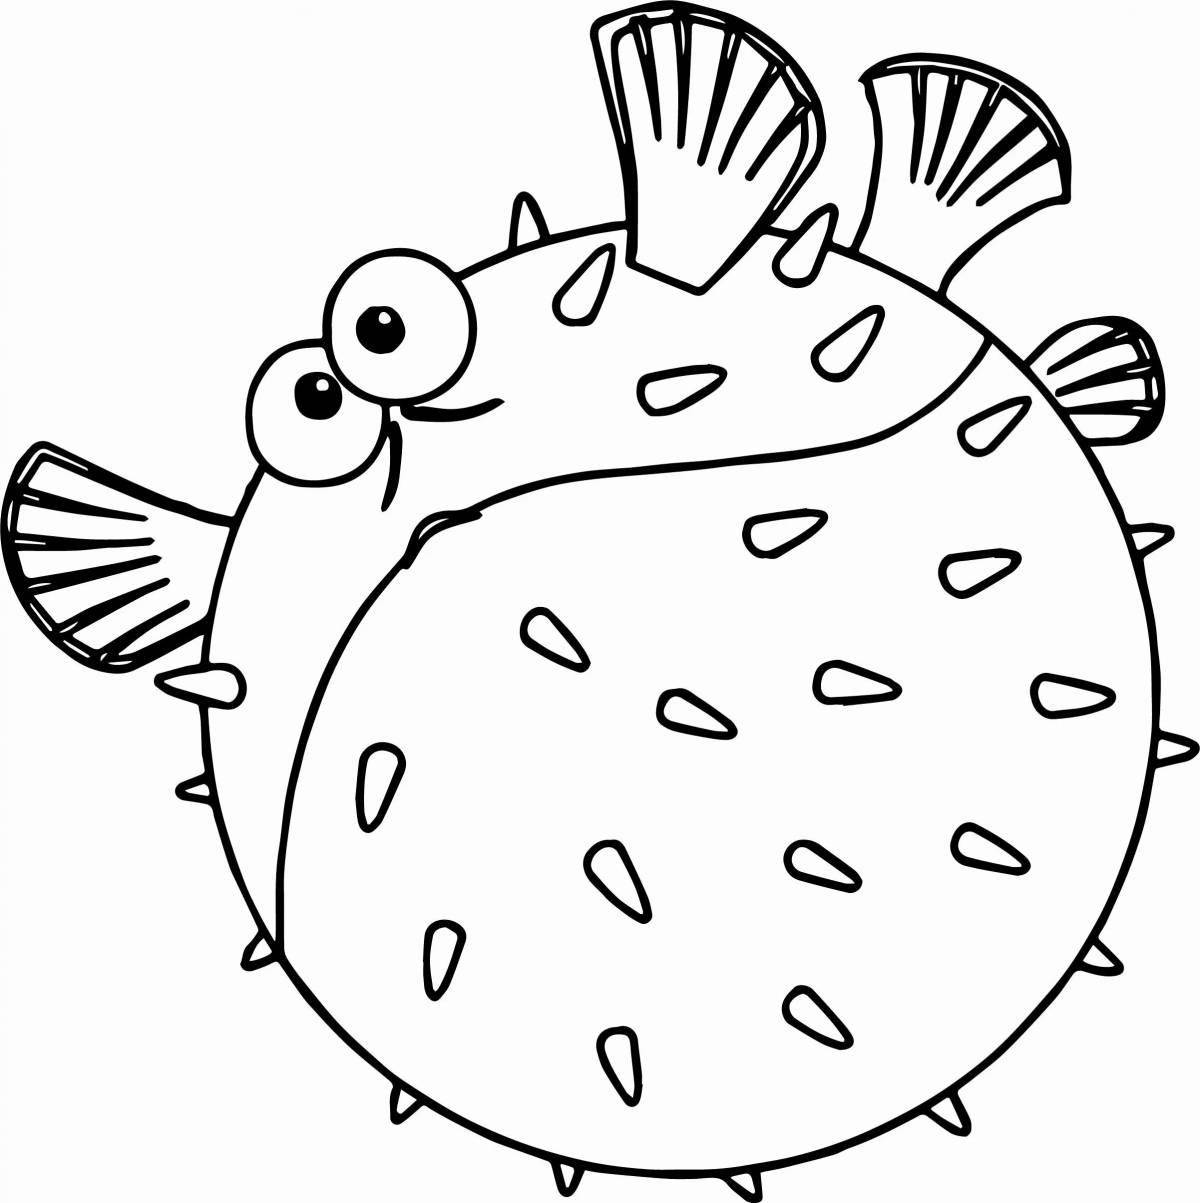 Coloring funny ball fish